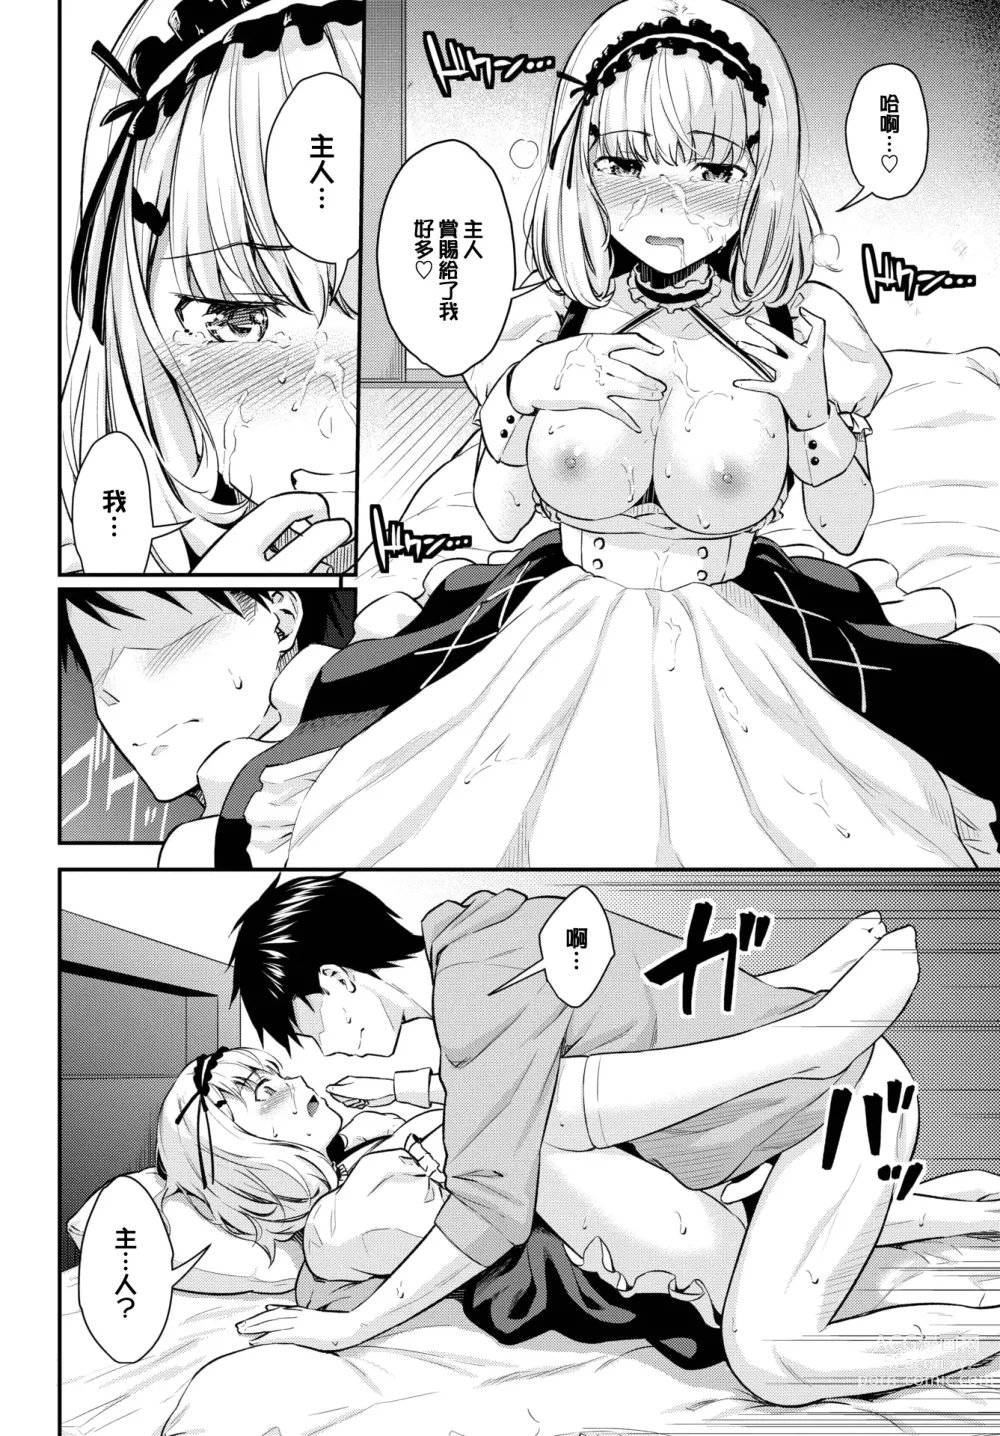 Page 11 of manga Maid Training